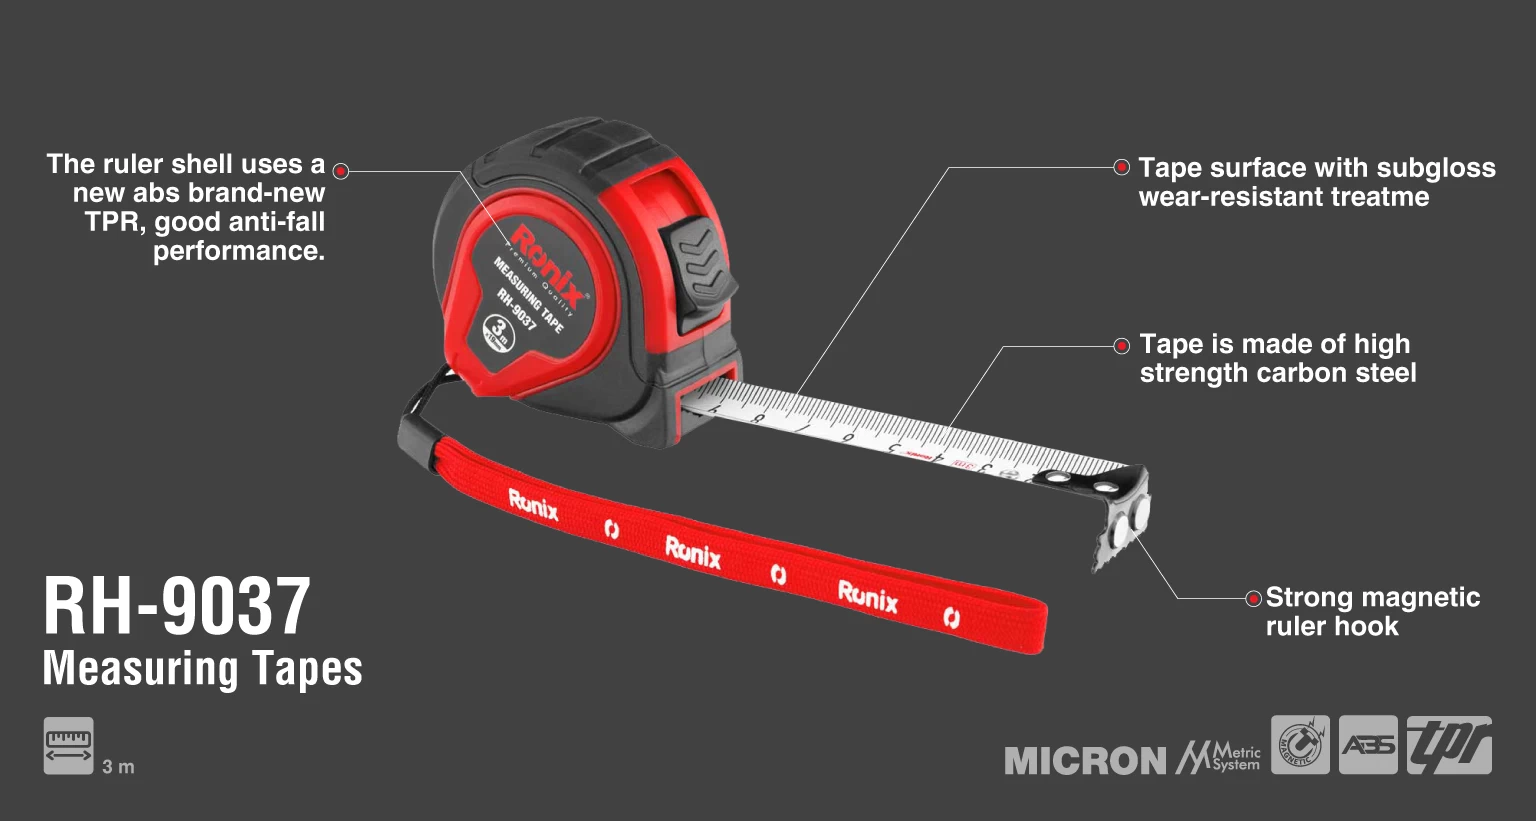 Measuring tape 3m-Micron model_details